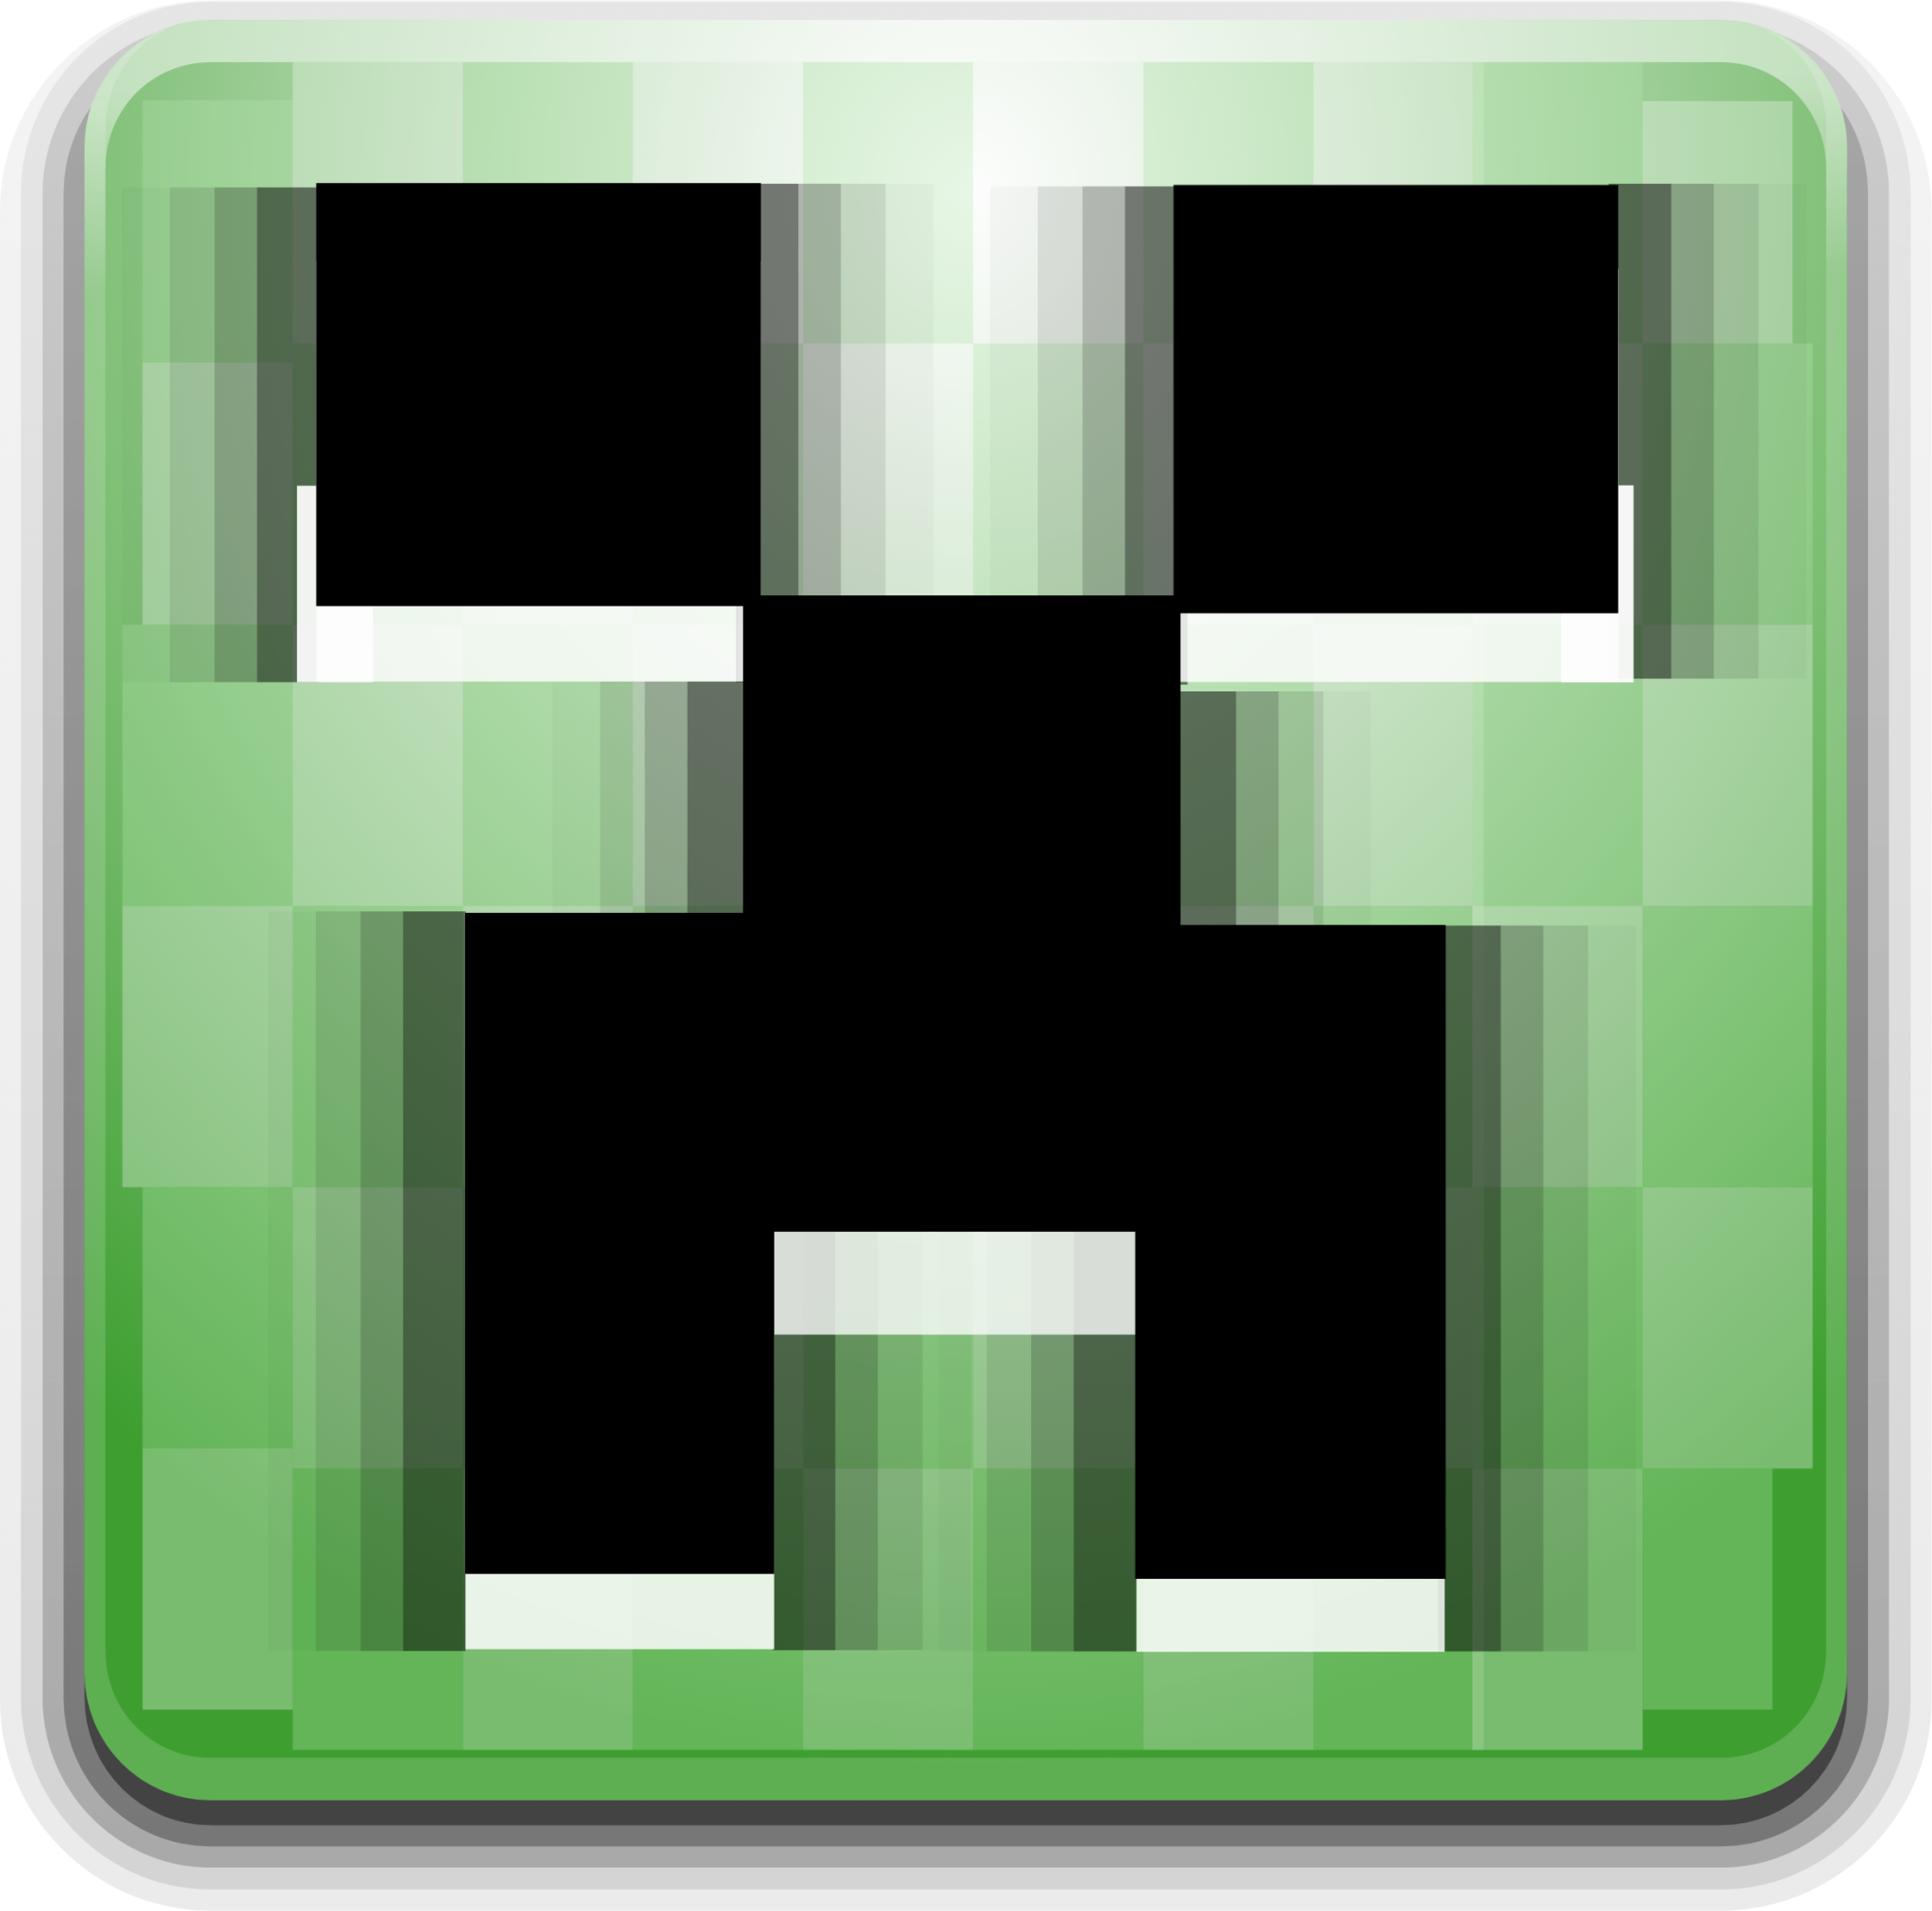 D Creeper Icon, Minecraft Iconpack